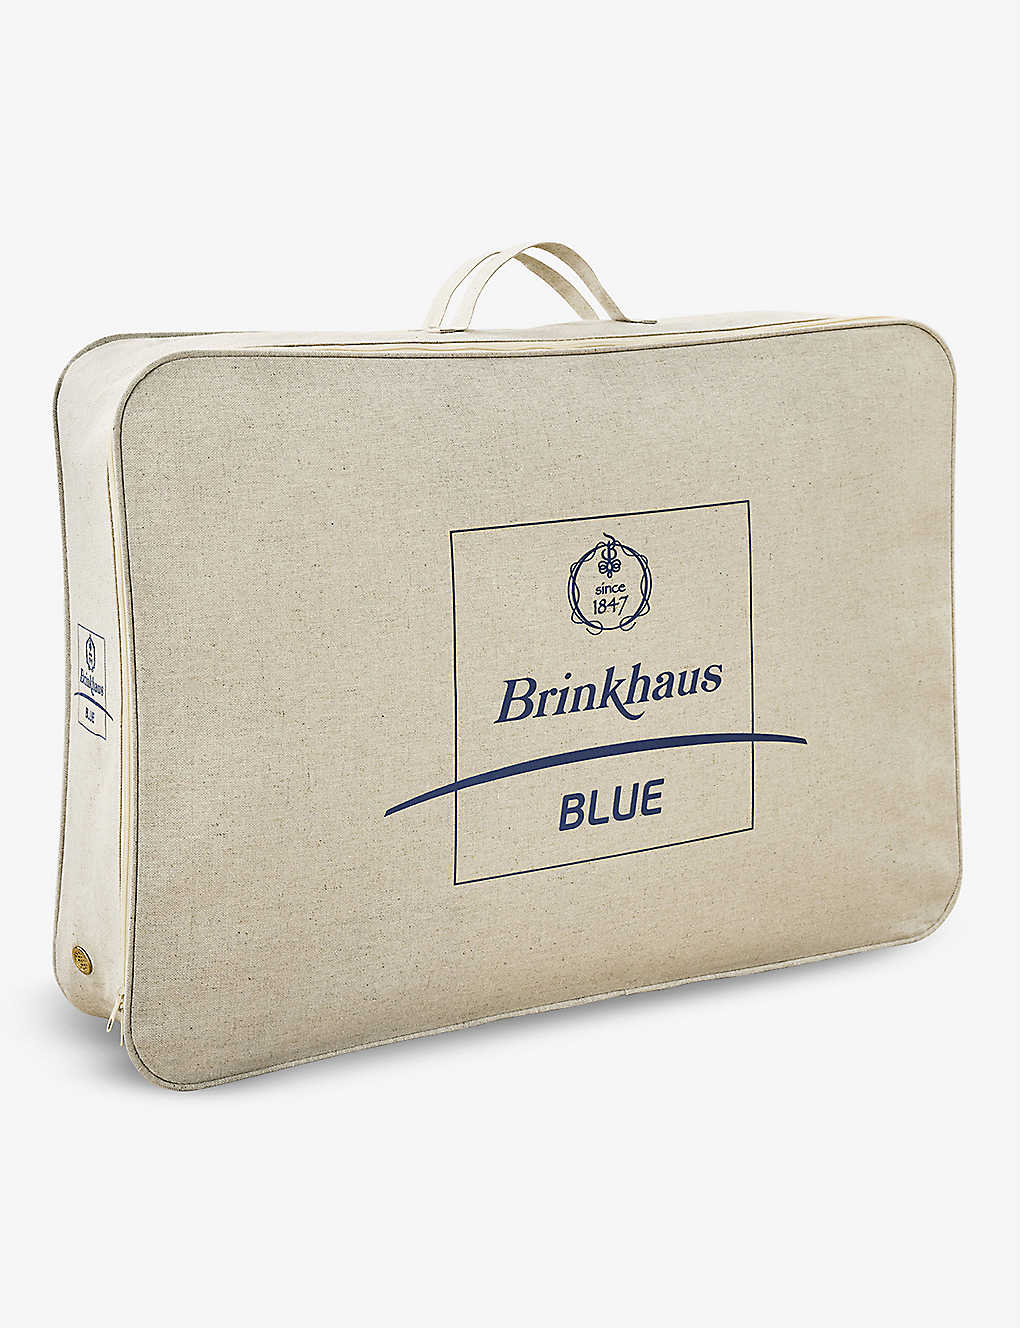 BRINKHAUS ブルー 素晴らしい ミディアム ダウン デュベ 135x200cm down 今年の新作から定番まで！ Blue duvet #WHITE medium